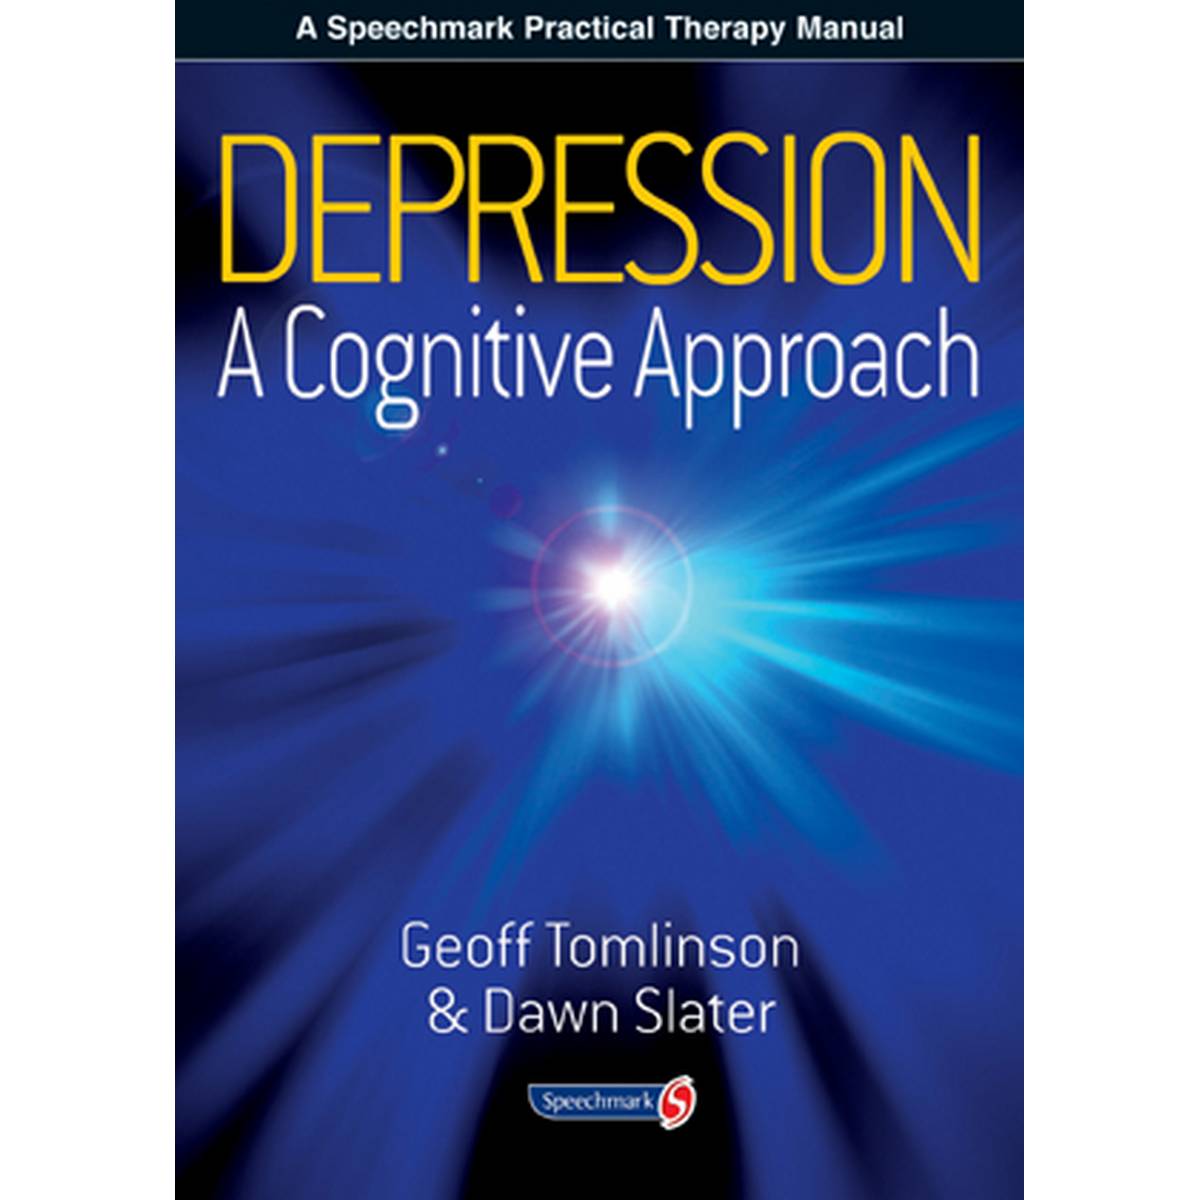 Depression - A Cognitive Approach